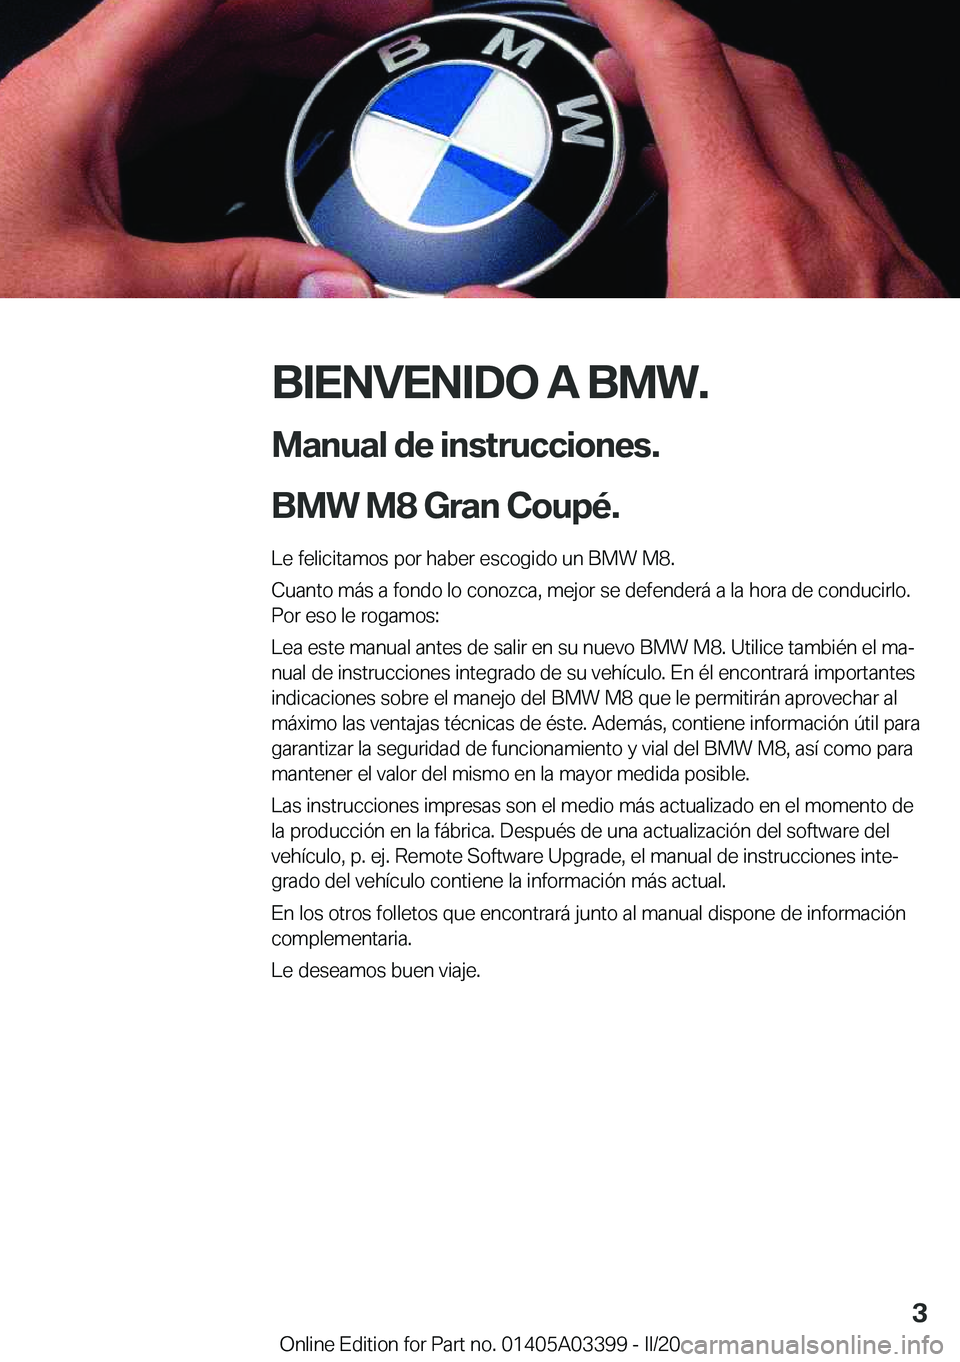 BMW M8 GRAN COUPE 2020  Manuales de Empleo (in Spanish) �B�I�E�N�V�E�N�I�D�O��A��B�M�W�.
�M�a�n�u�a�l��d�e��i�n�s�t�r�u�c�c�i�o�n�e�s�.
�B�M�W��M�8��G�r�a�n��C�o�u�p�